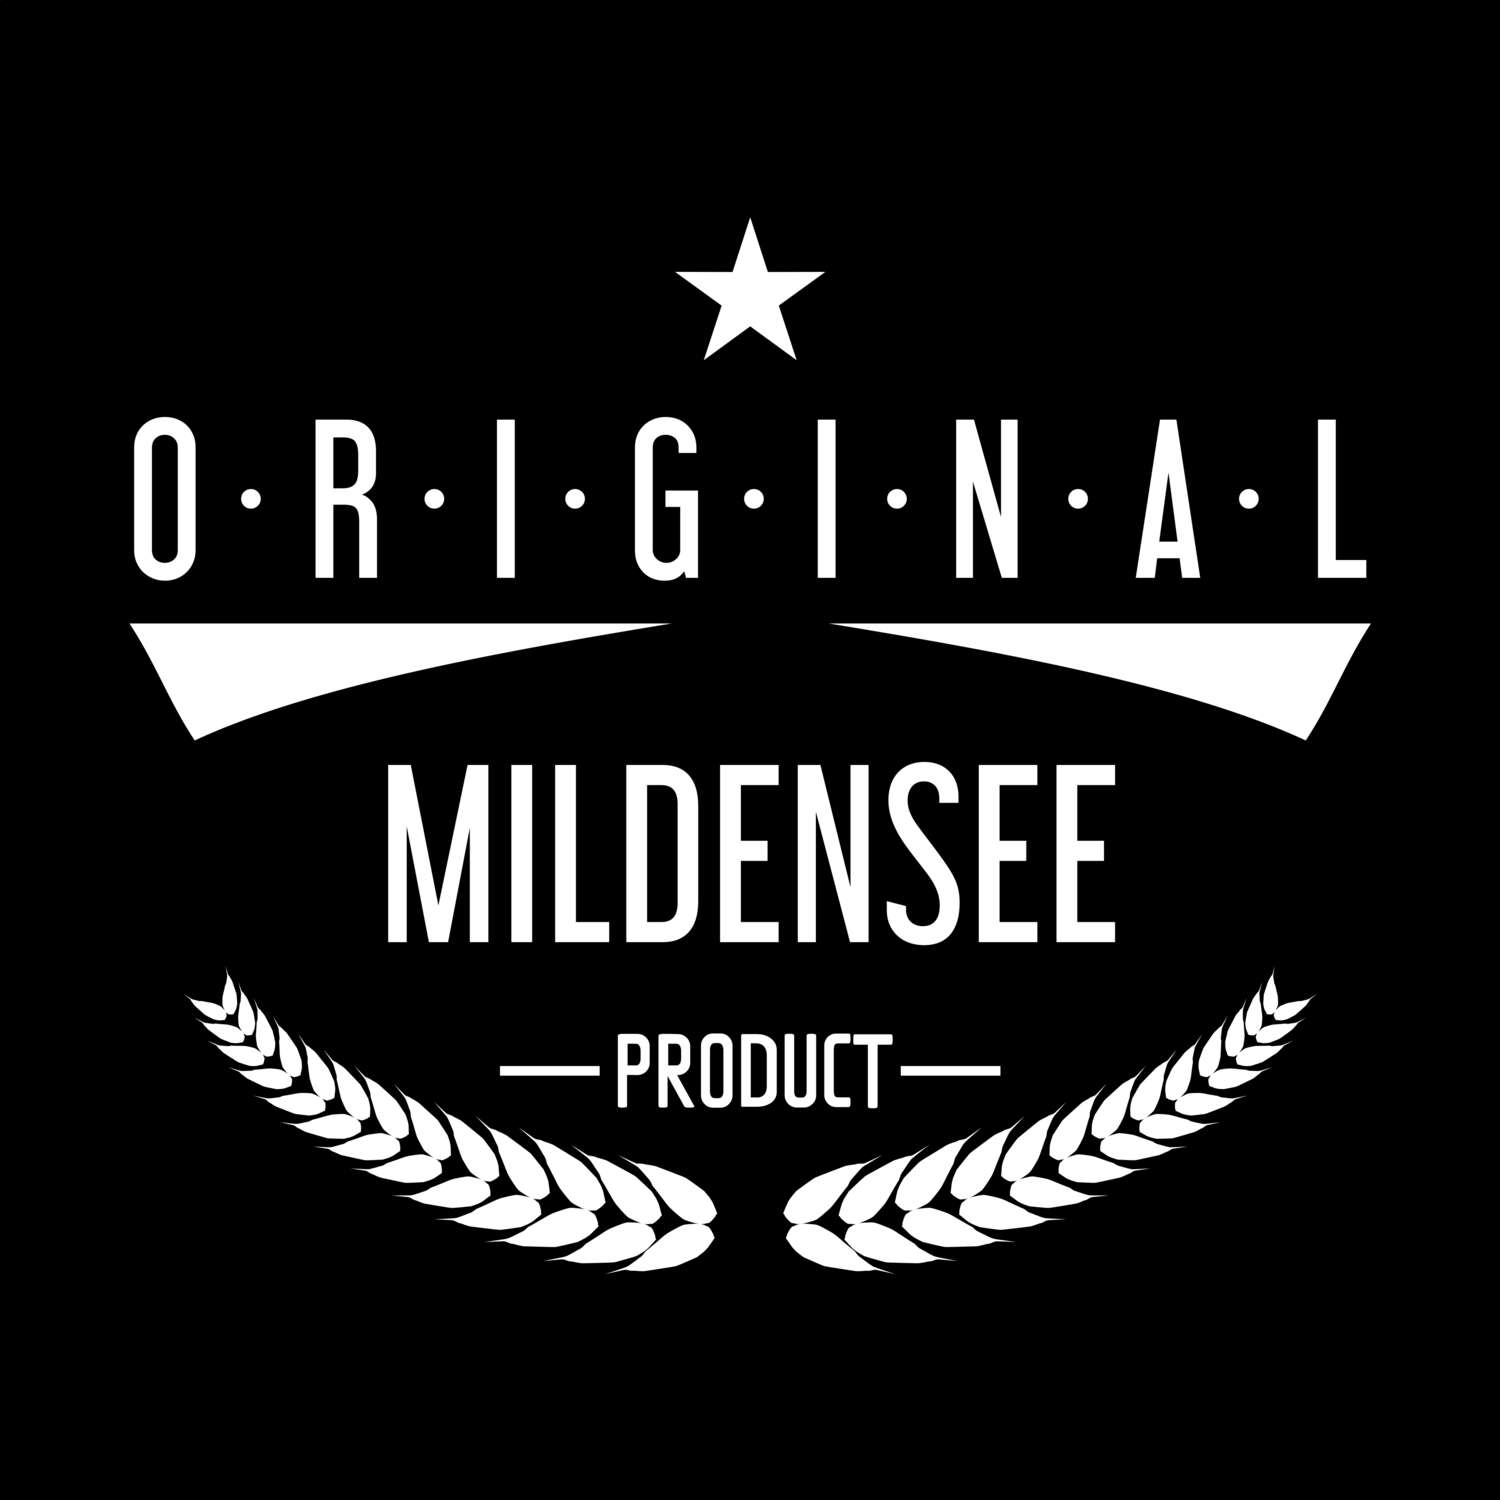 Mildensee T-Shirt »Original Product«